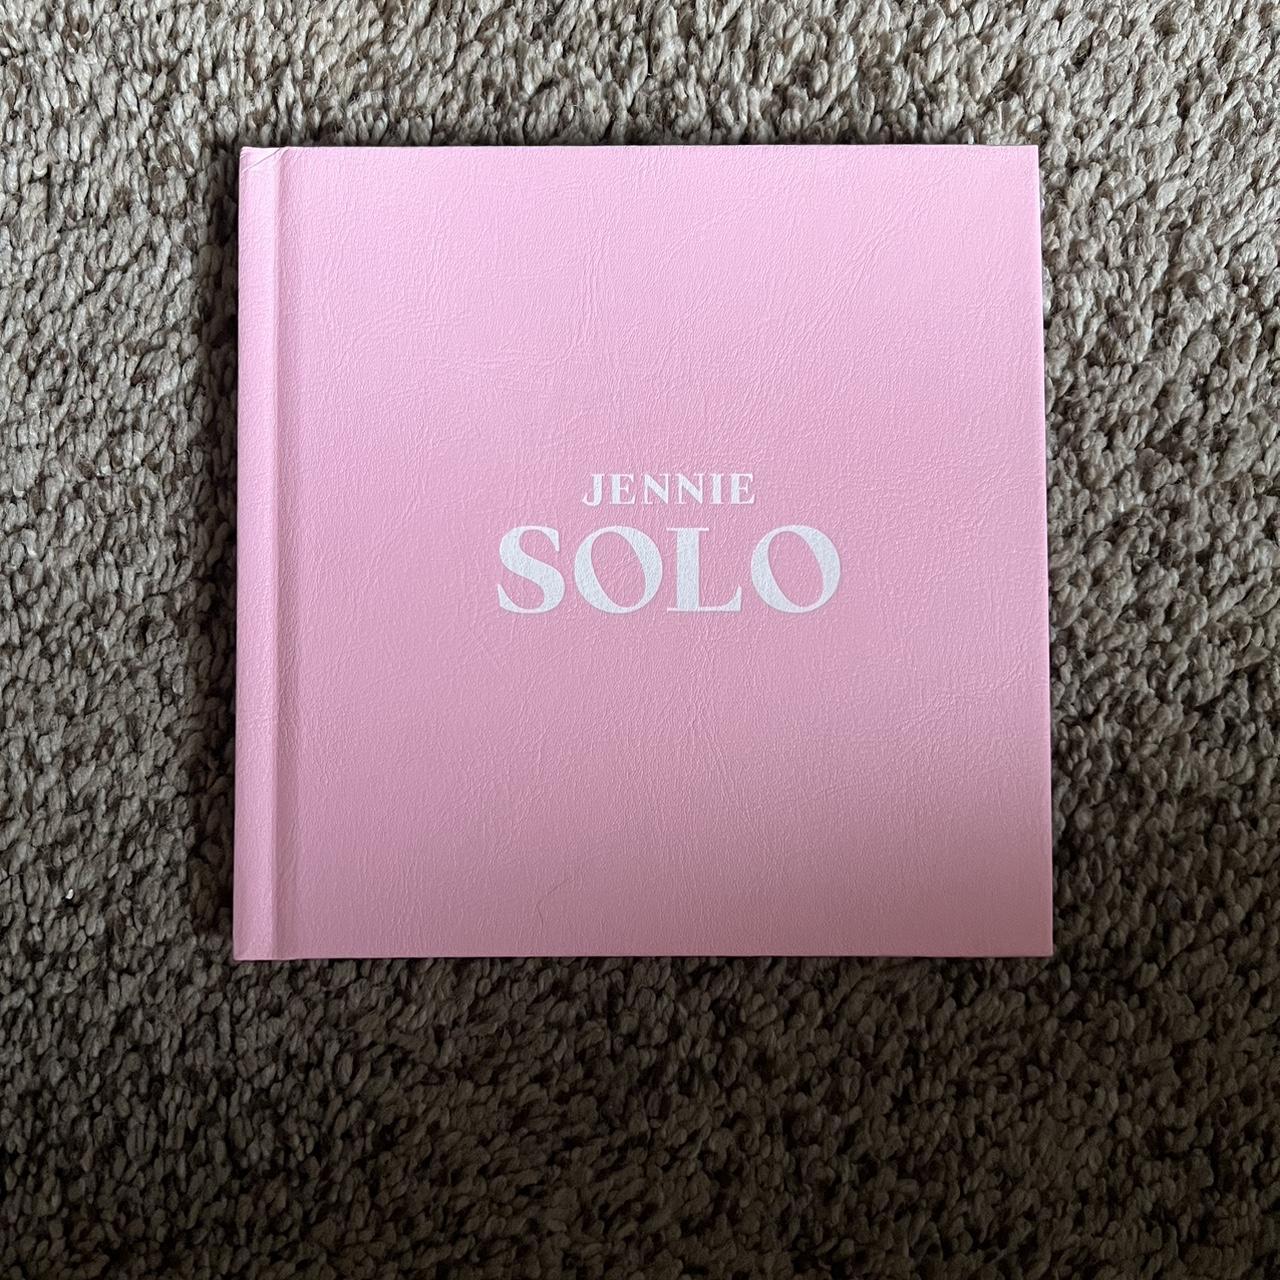 BLACKPINK’s Jennie “SOLO” Album. Complete with... - Depop